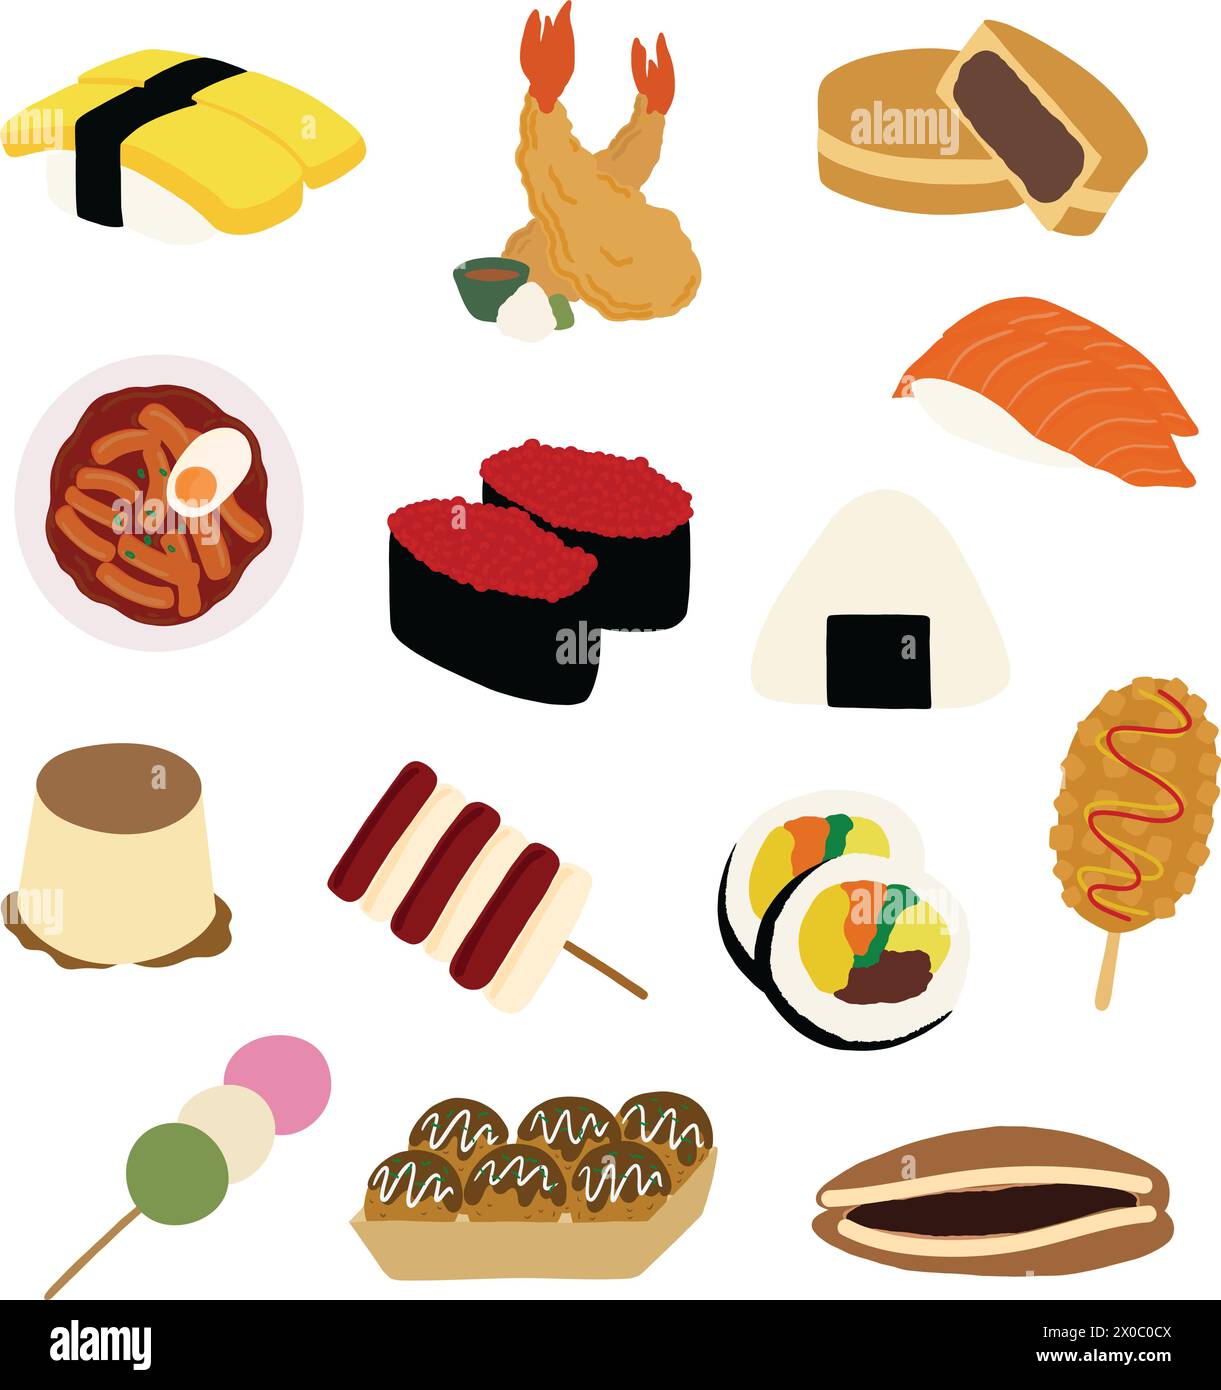 Cibi asiatici e spuntini preparati a mano, tra cui sushi, tempura, onigiri, salsicce, pancake di fagioli rossi, dango per piatti coreani, giapponesi e menu' Illustrazione Vettoriale